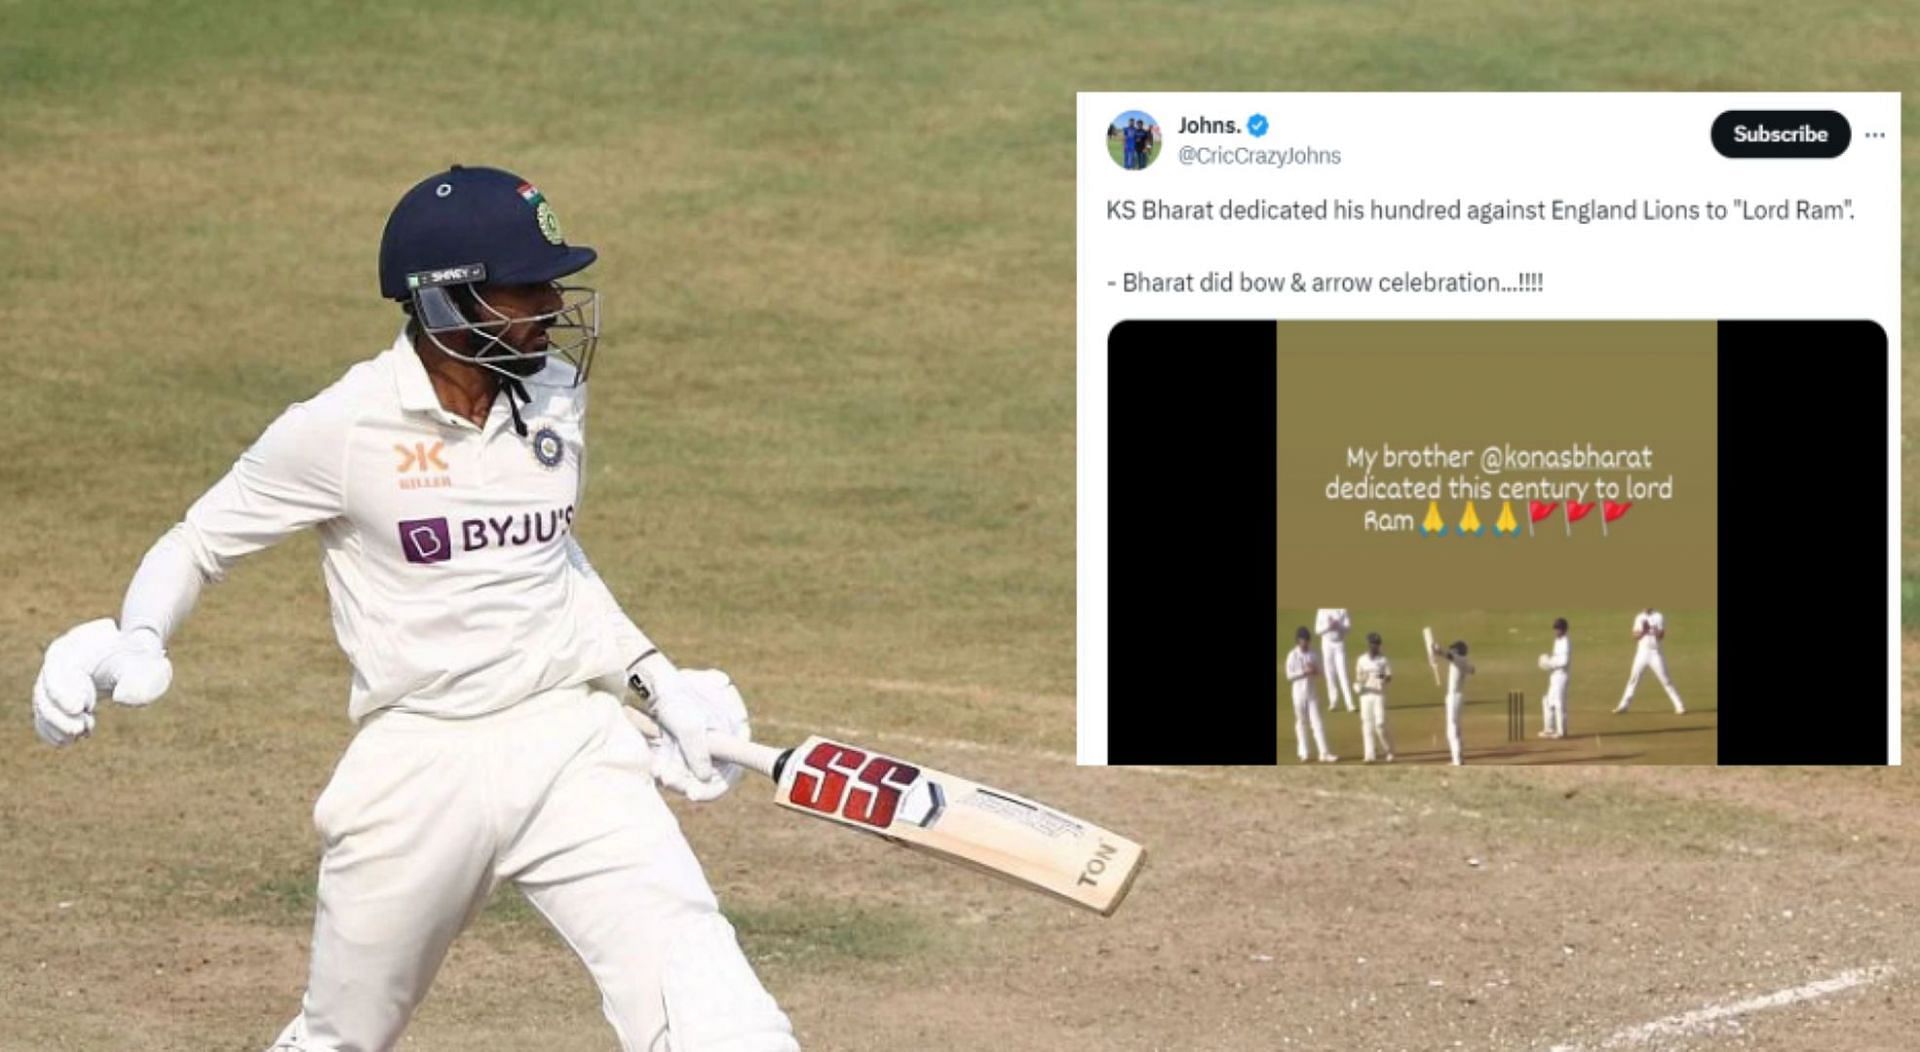 Bharat scored a match-saving unbeaten century to rejuvenate his Test hopes